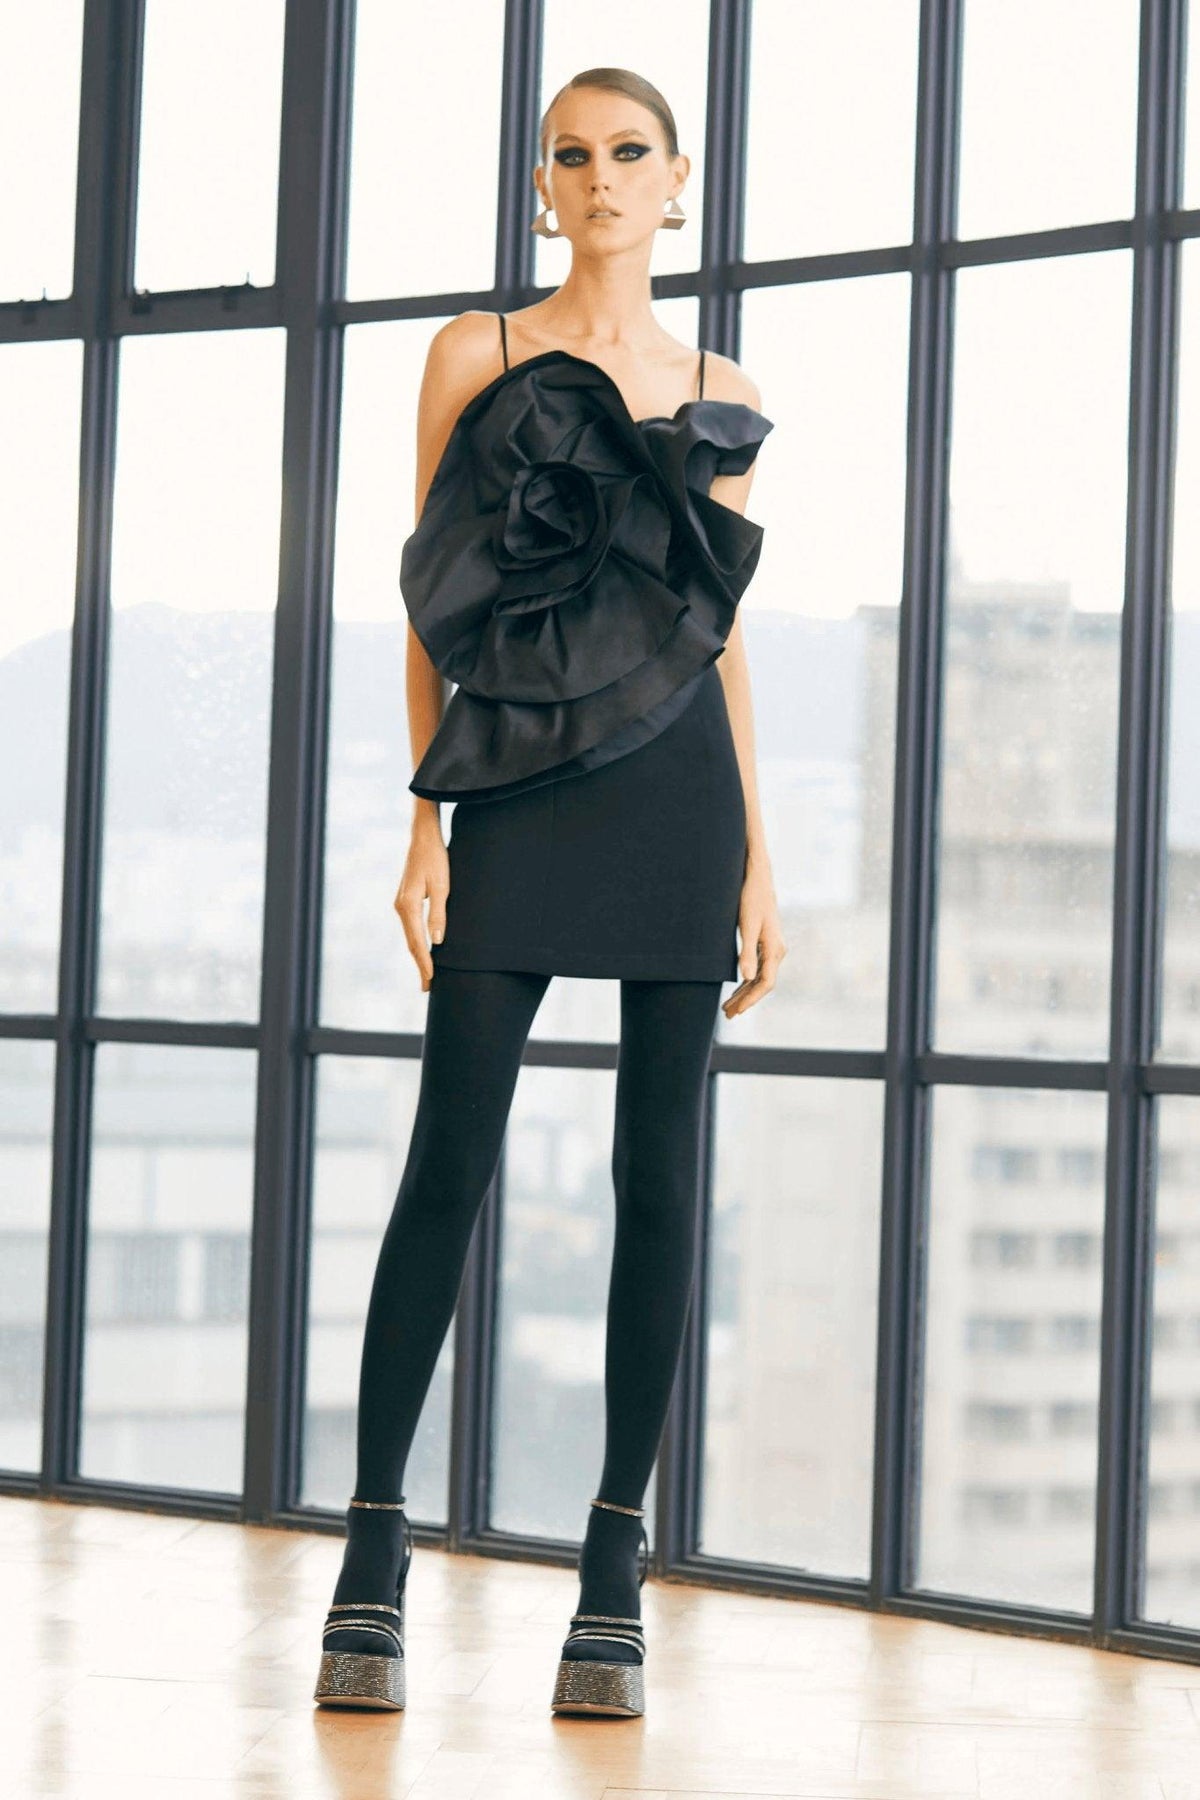 Short Black Dress with 3D Flower Embellishment - Spring in Summer